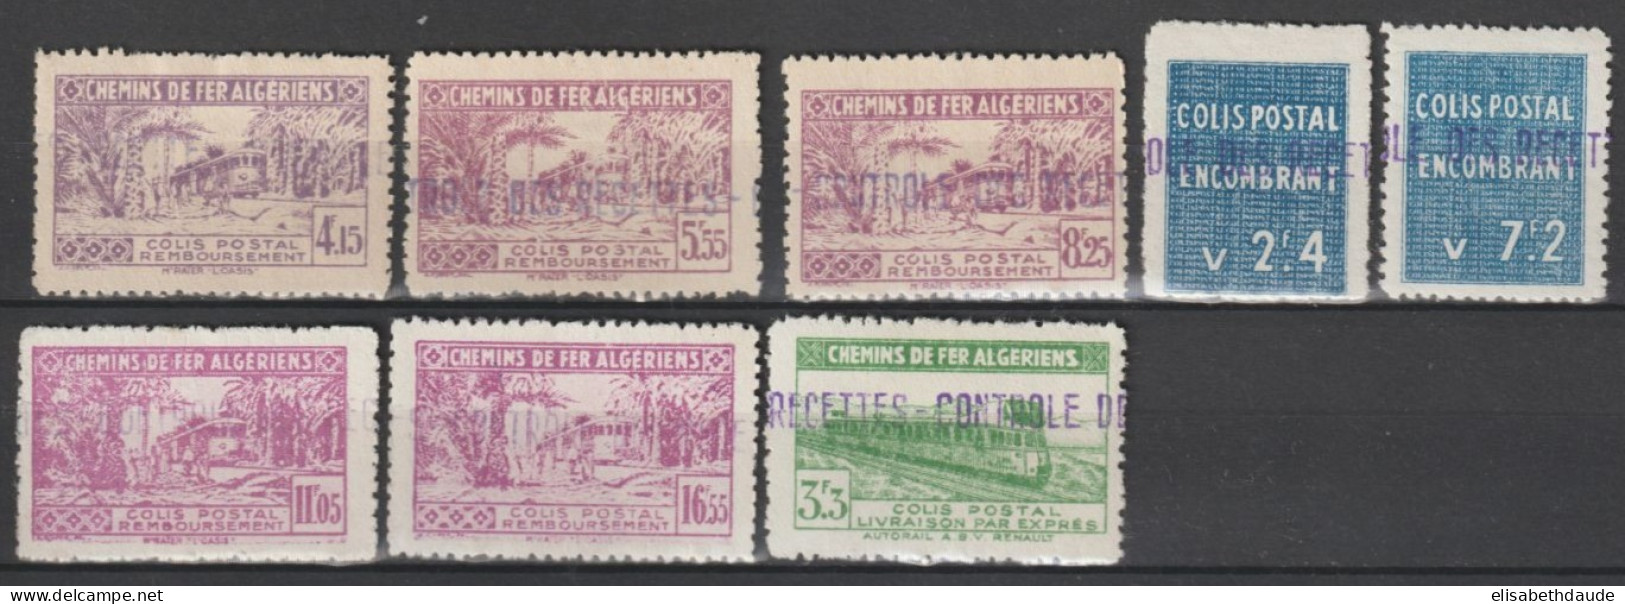 ALGERIE - 1941 - COLIS POSTAUX - YVERT N°90//94 (*) + 89 + 96/97 * MLH - COTE = 69 EUR - Postpaketten